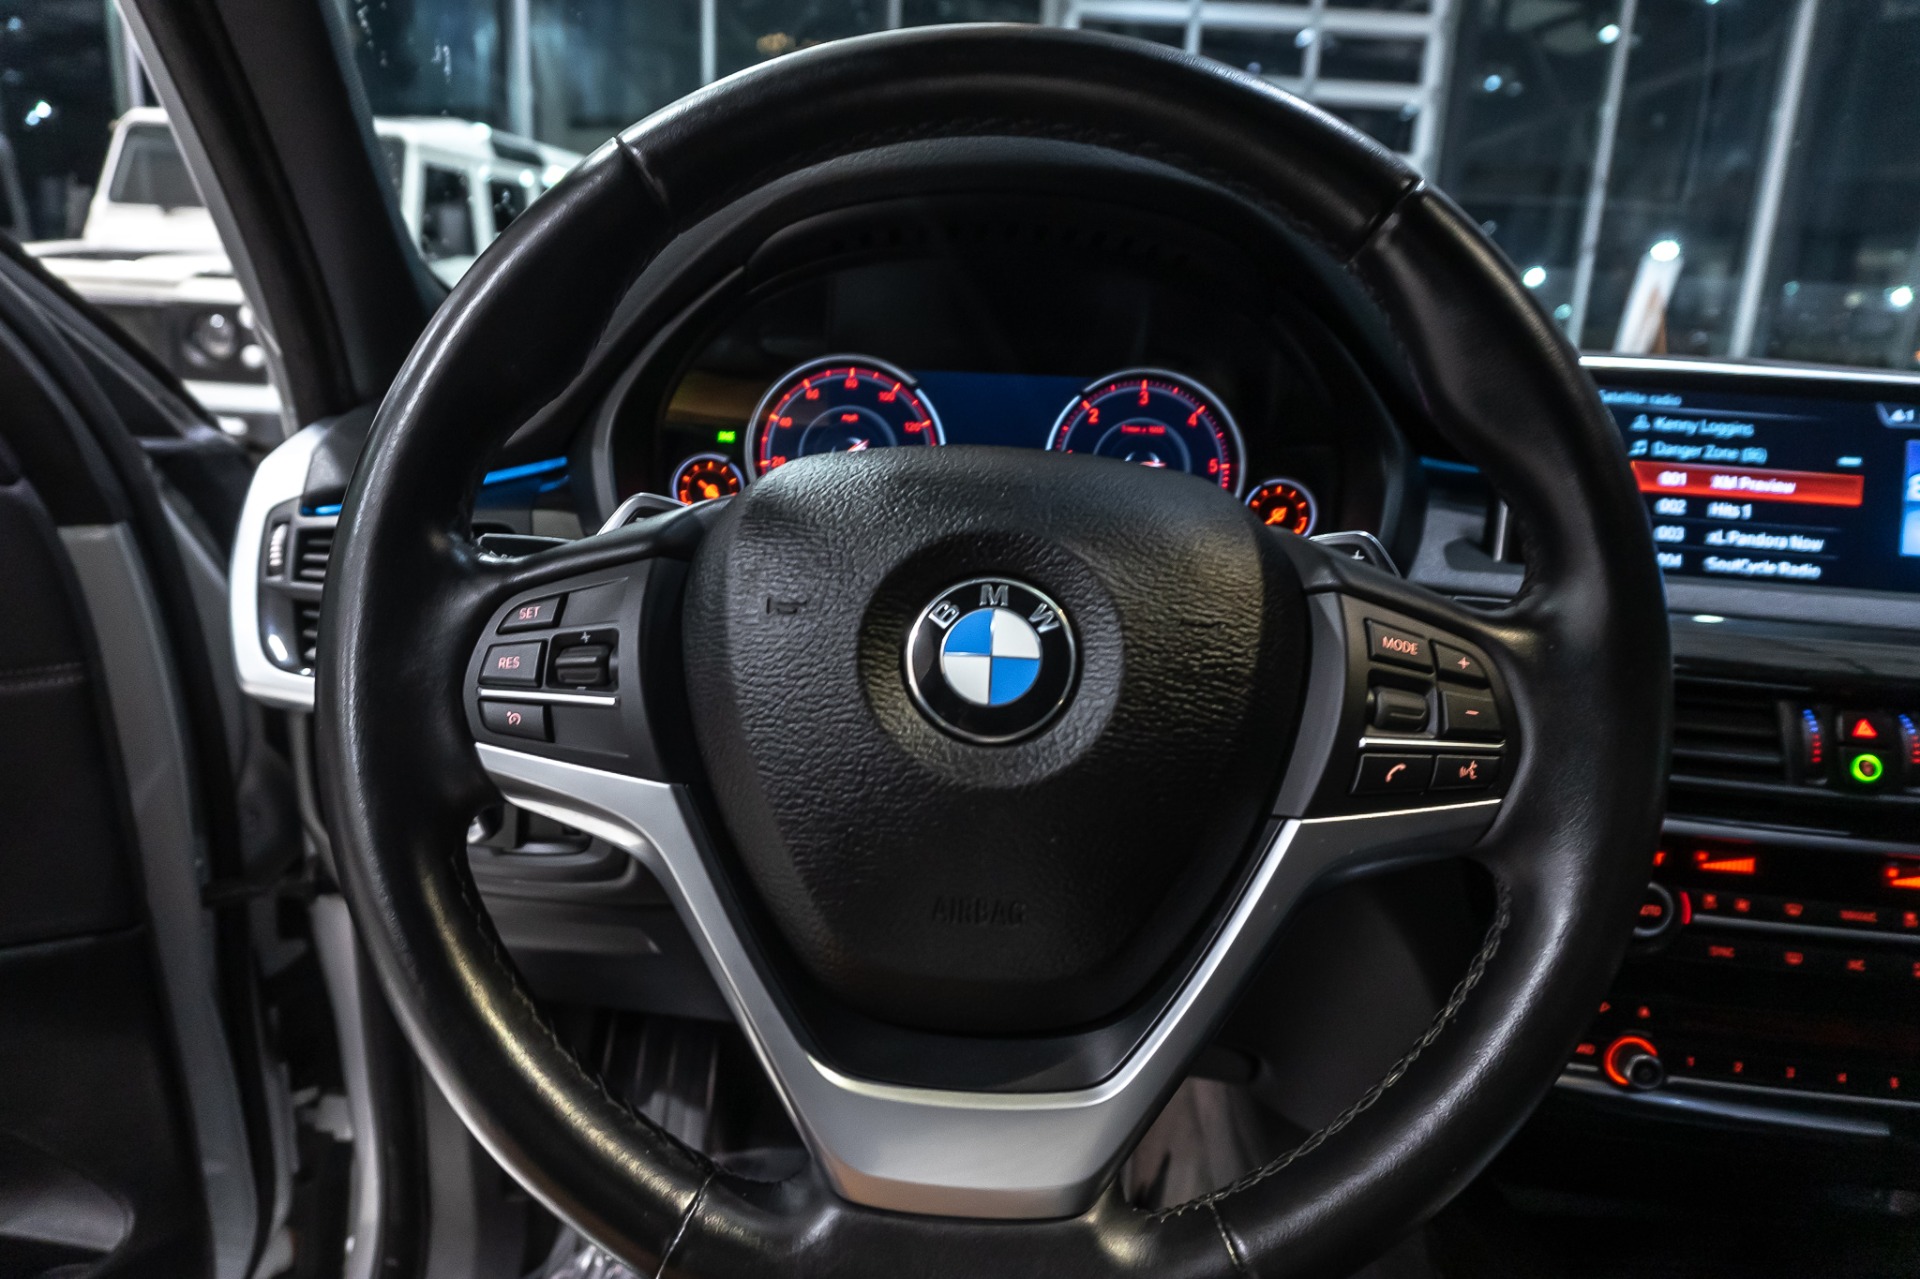 Used-2018-BMW-X5-xDrive35d-SUV-EXECUTIVE-PKG-DRIVER-ASSIST-PREMIUM-PKG